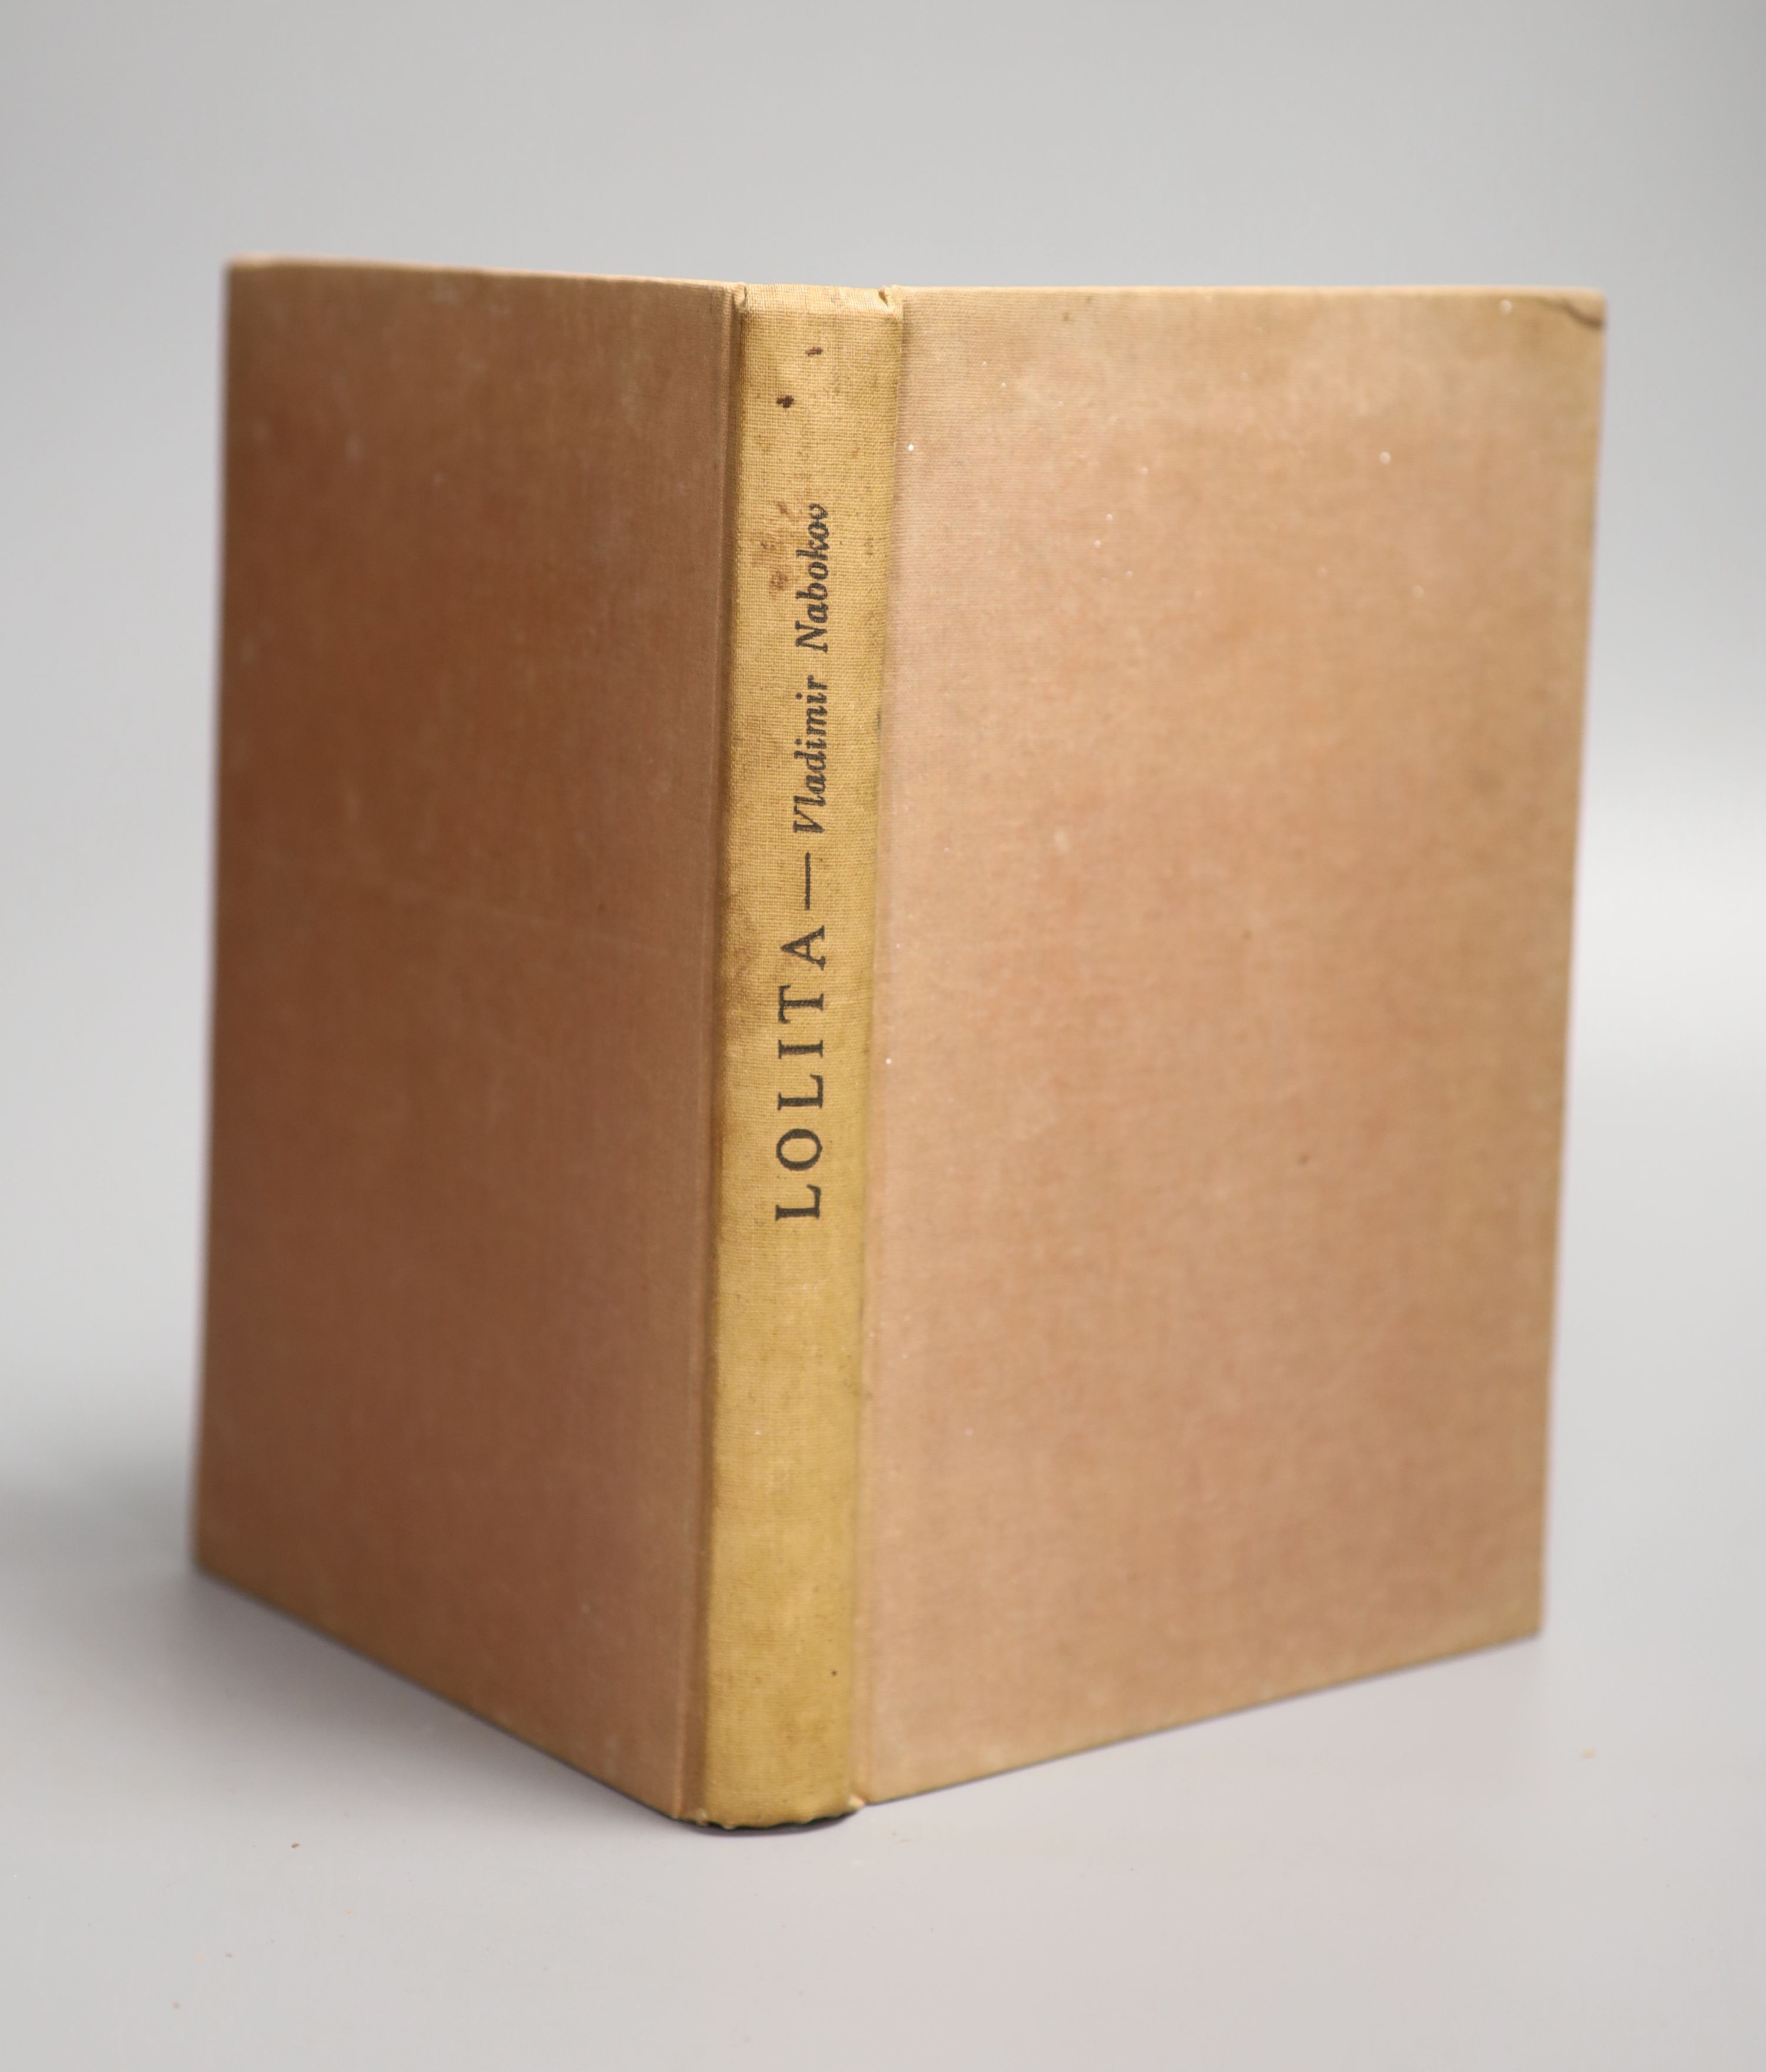 Nabokov, Vladimir - Lolita, 1st Indian edition, 8vo, cloth, R. V. Pandit, Bombay, 1955